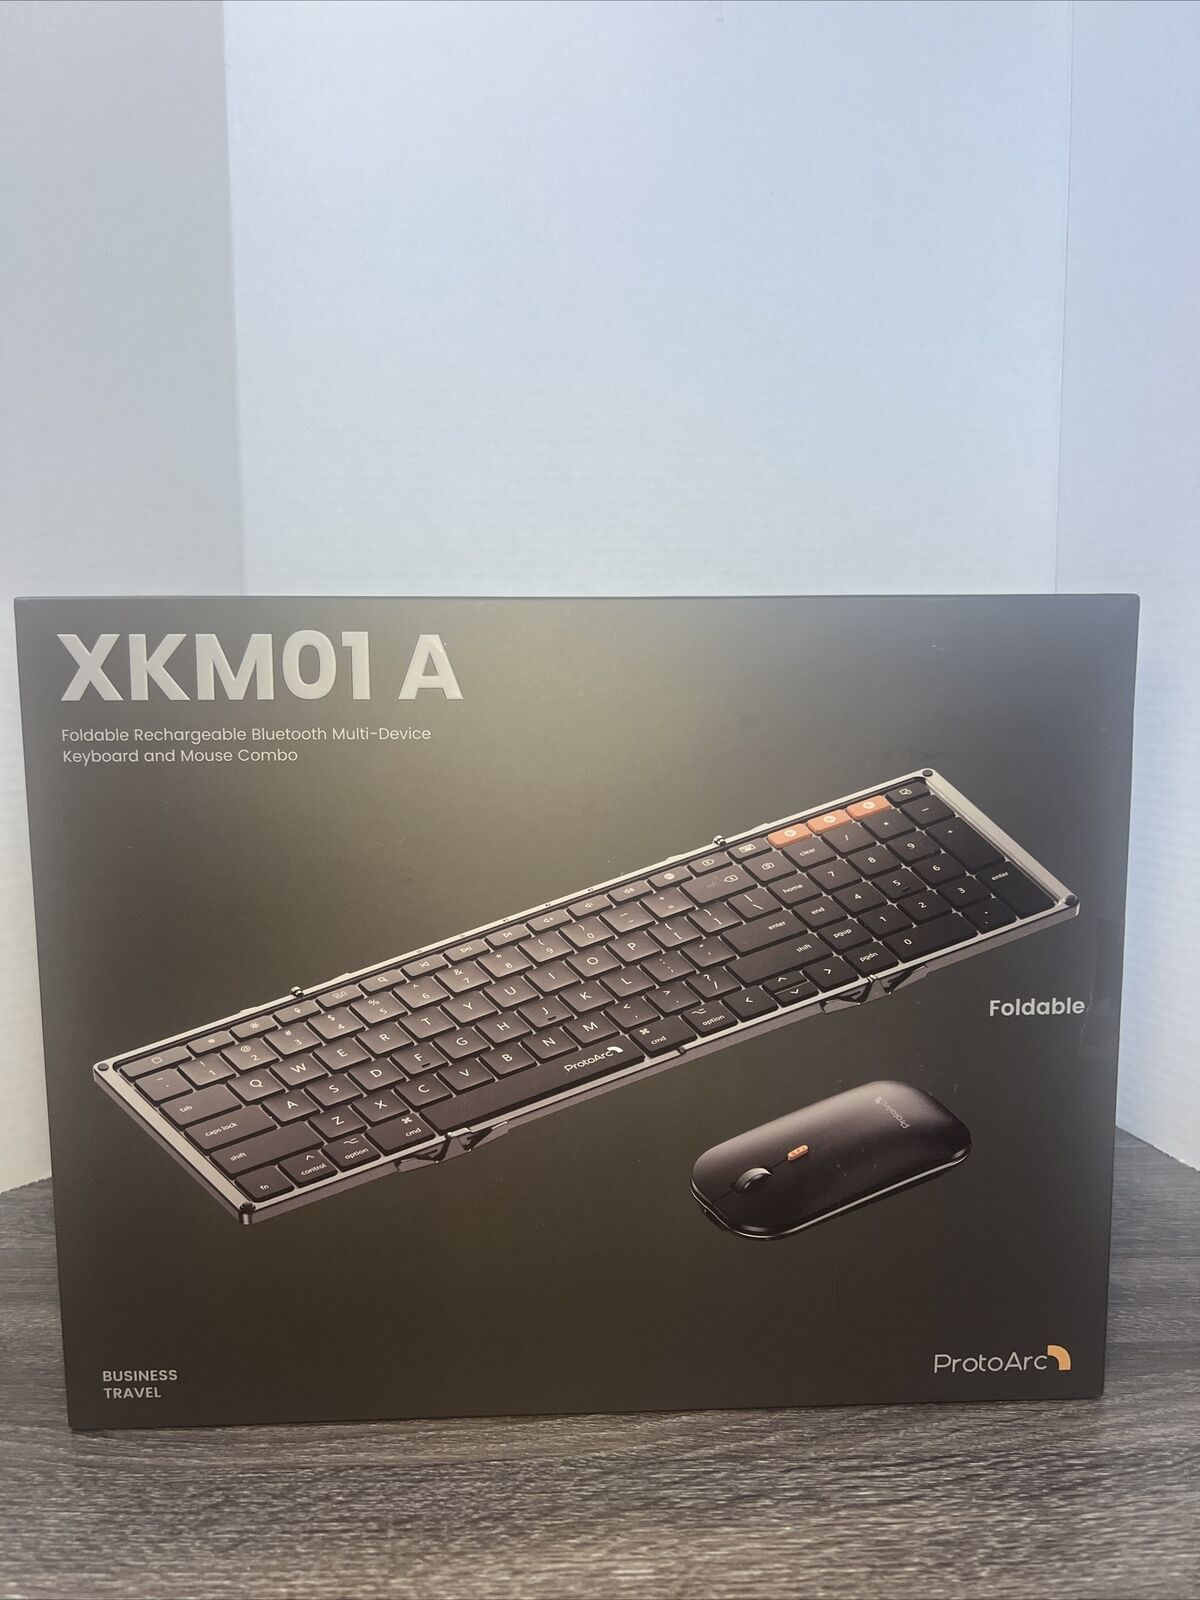 ProtoArc XKM01 A Foldable Keyboard and Mouse